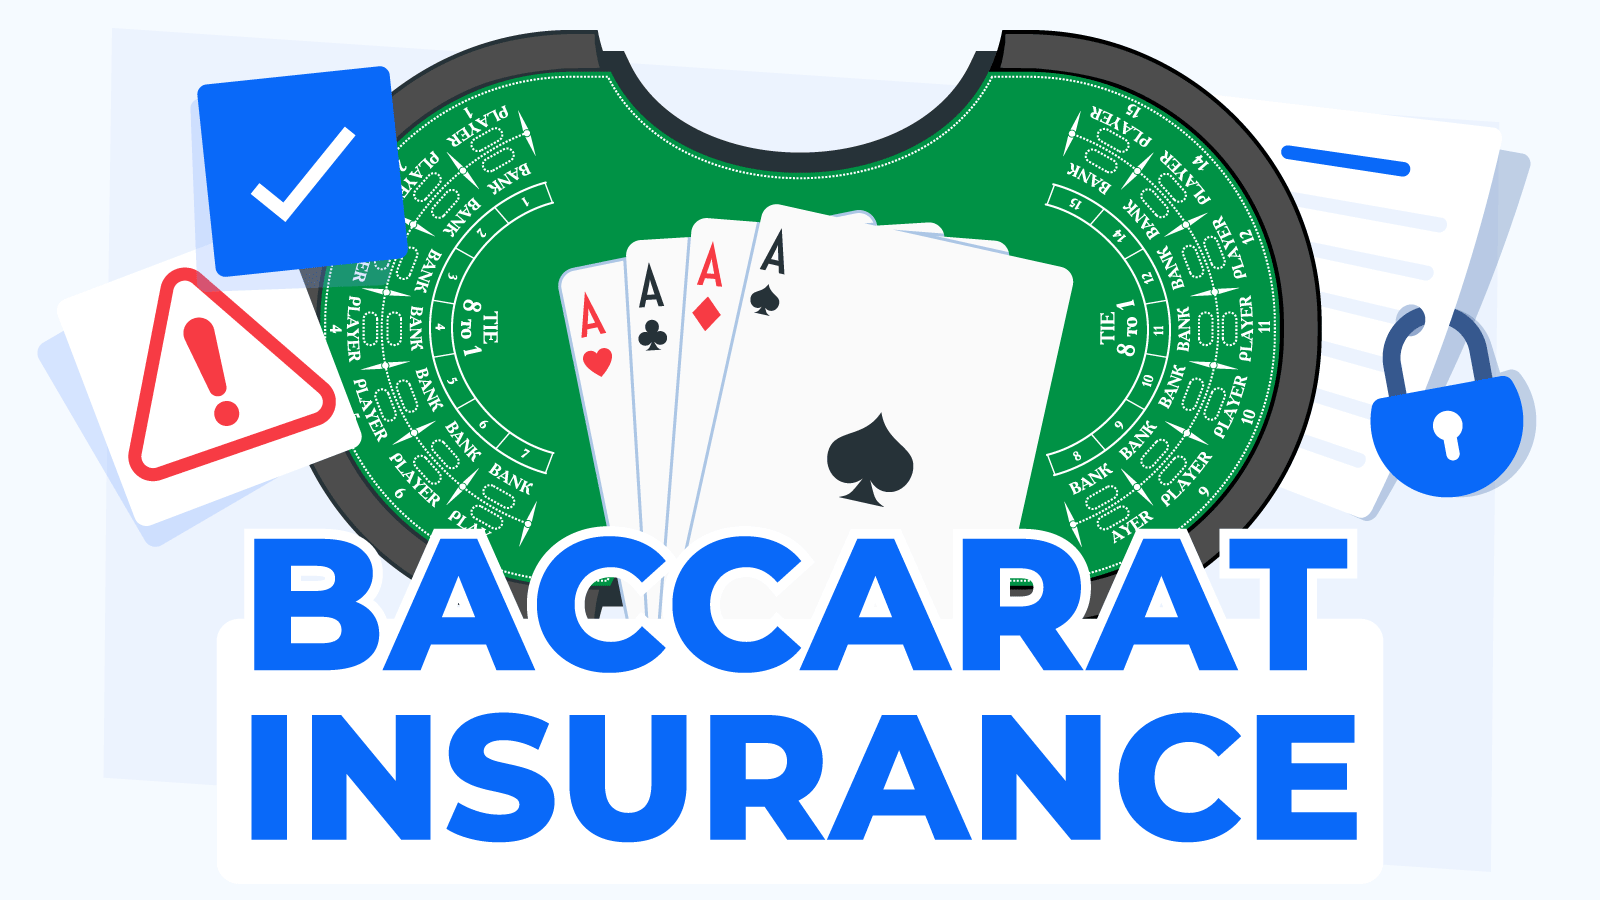 CasinoAlpha's take on Baccarat Insurance: Useful or Casino trap?